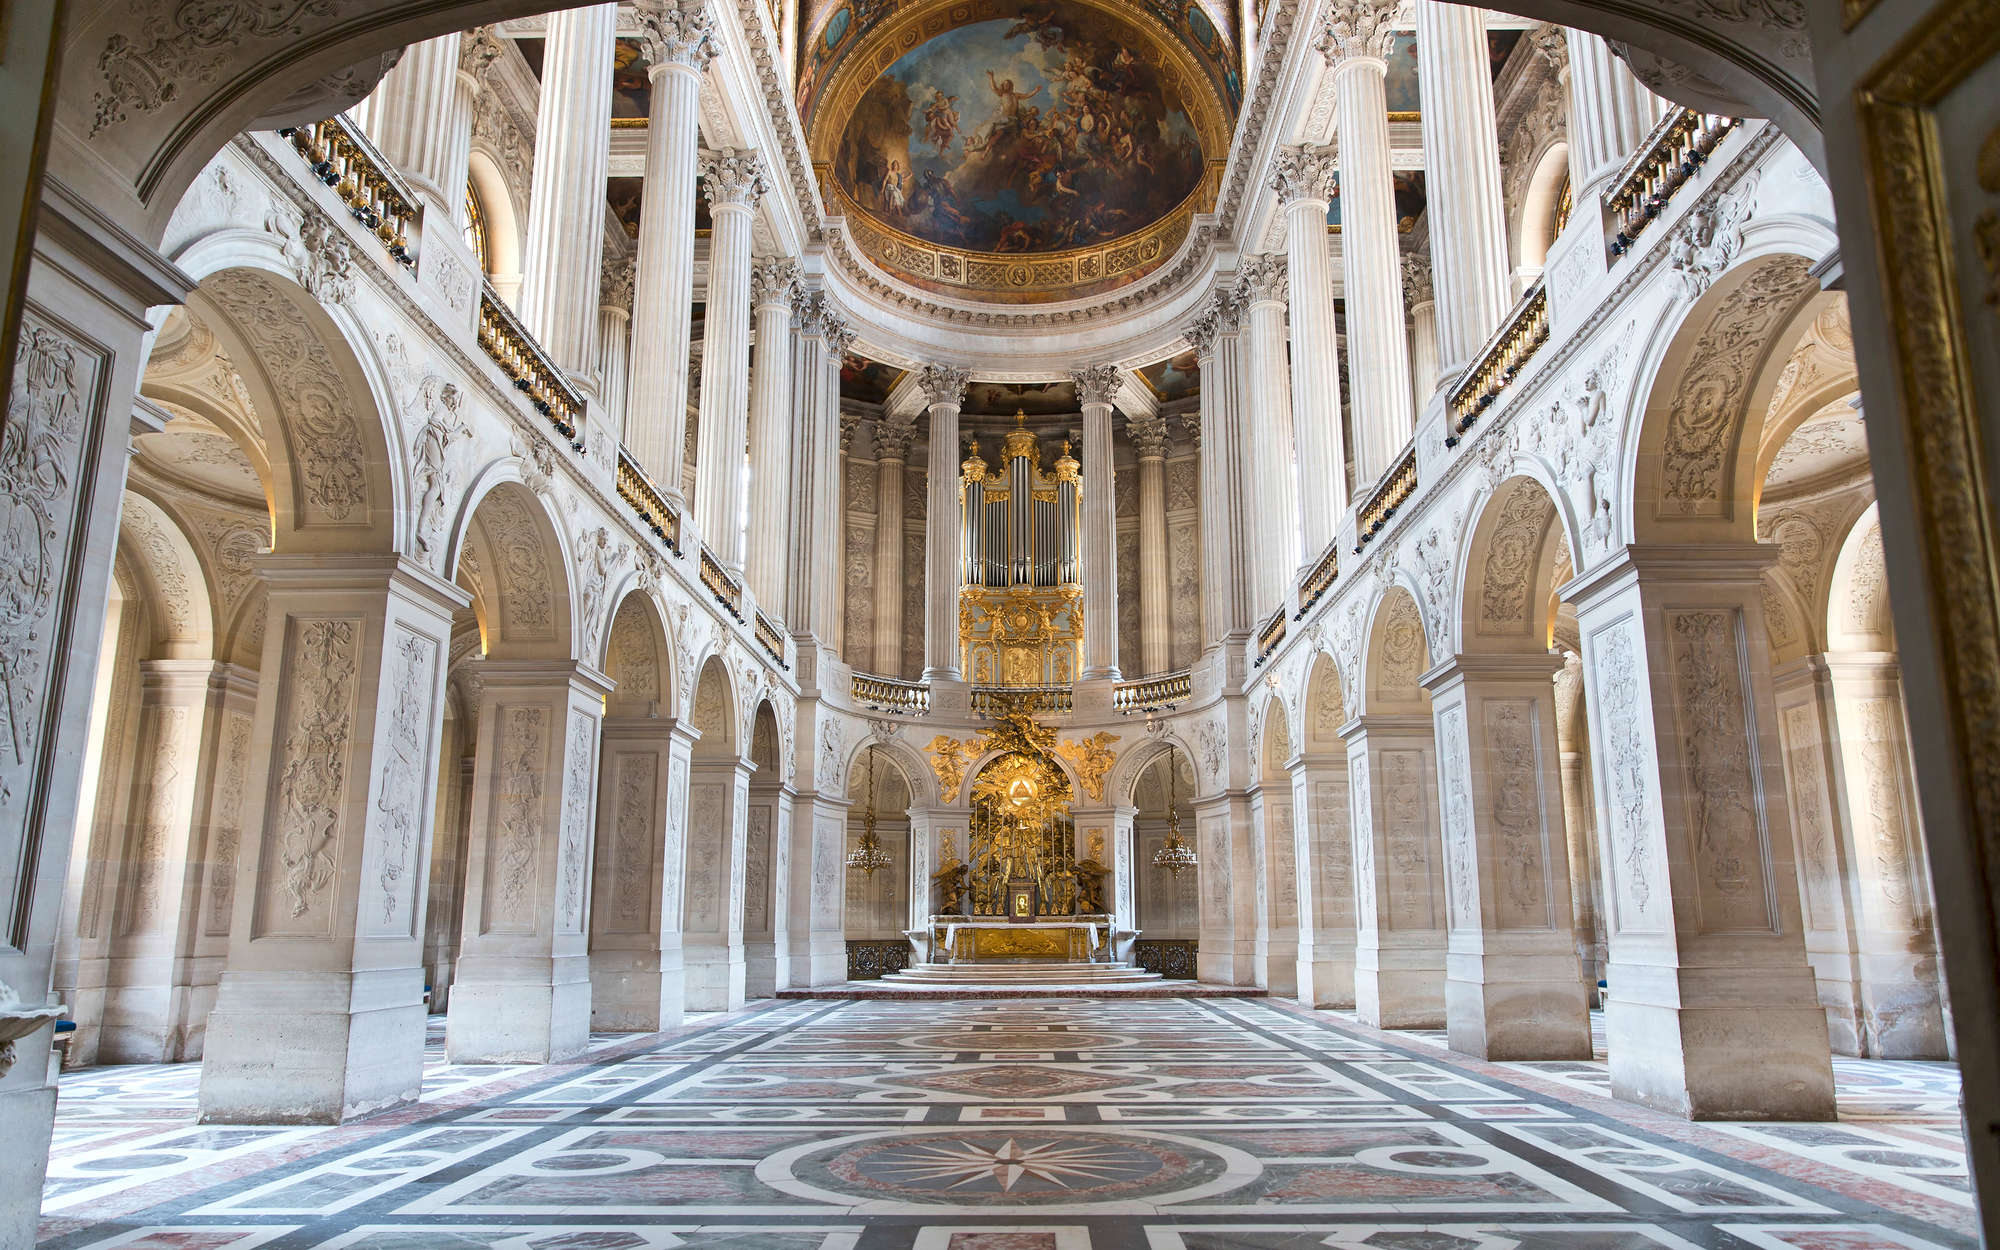             Barok Onderlaag behang Palace Versailles Hall - structuurvlies
        